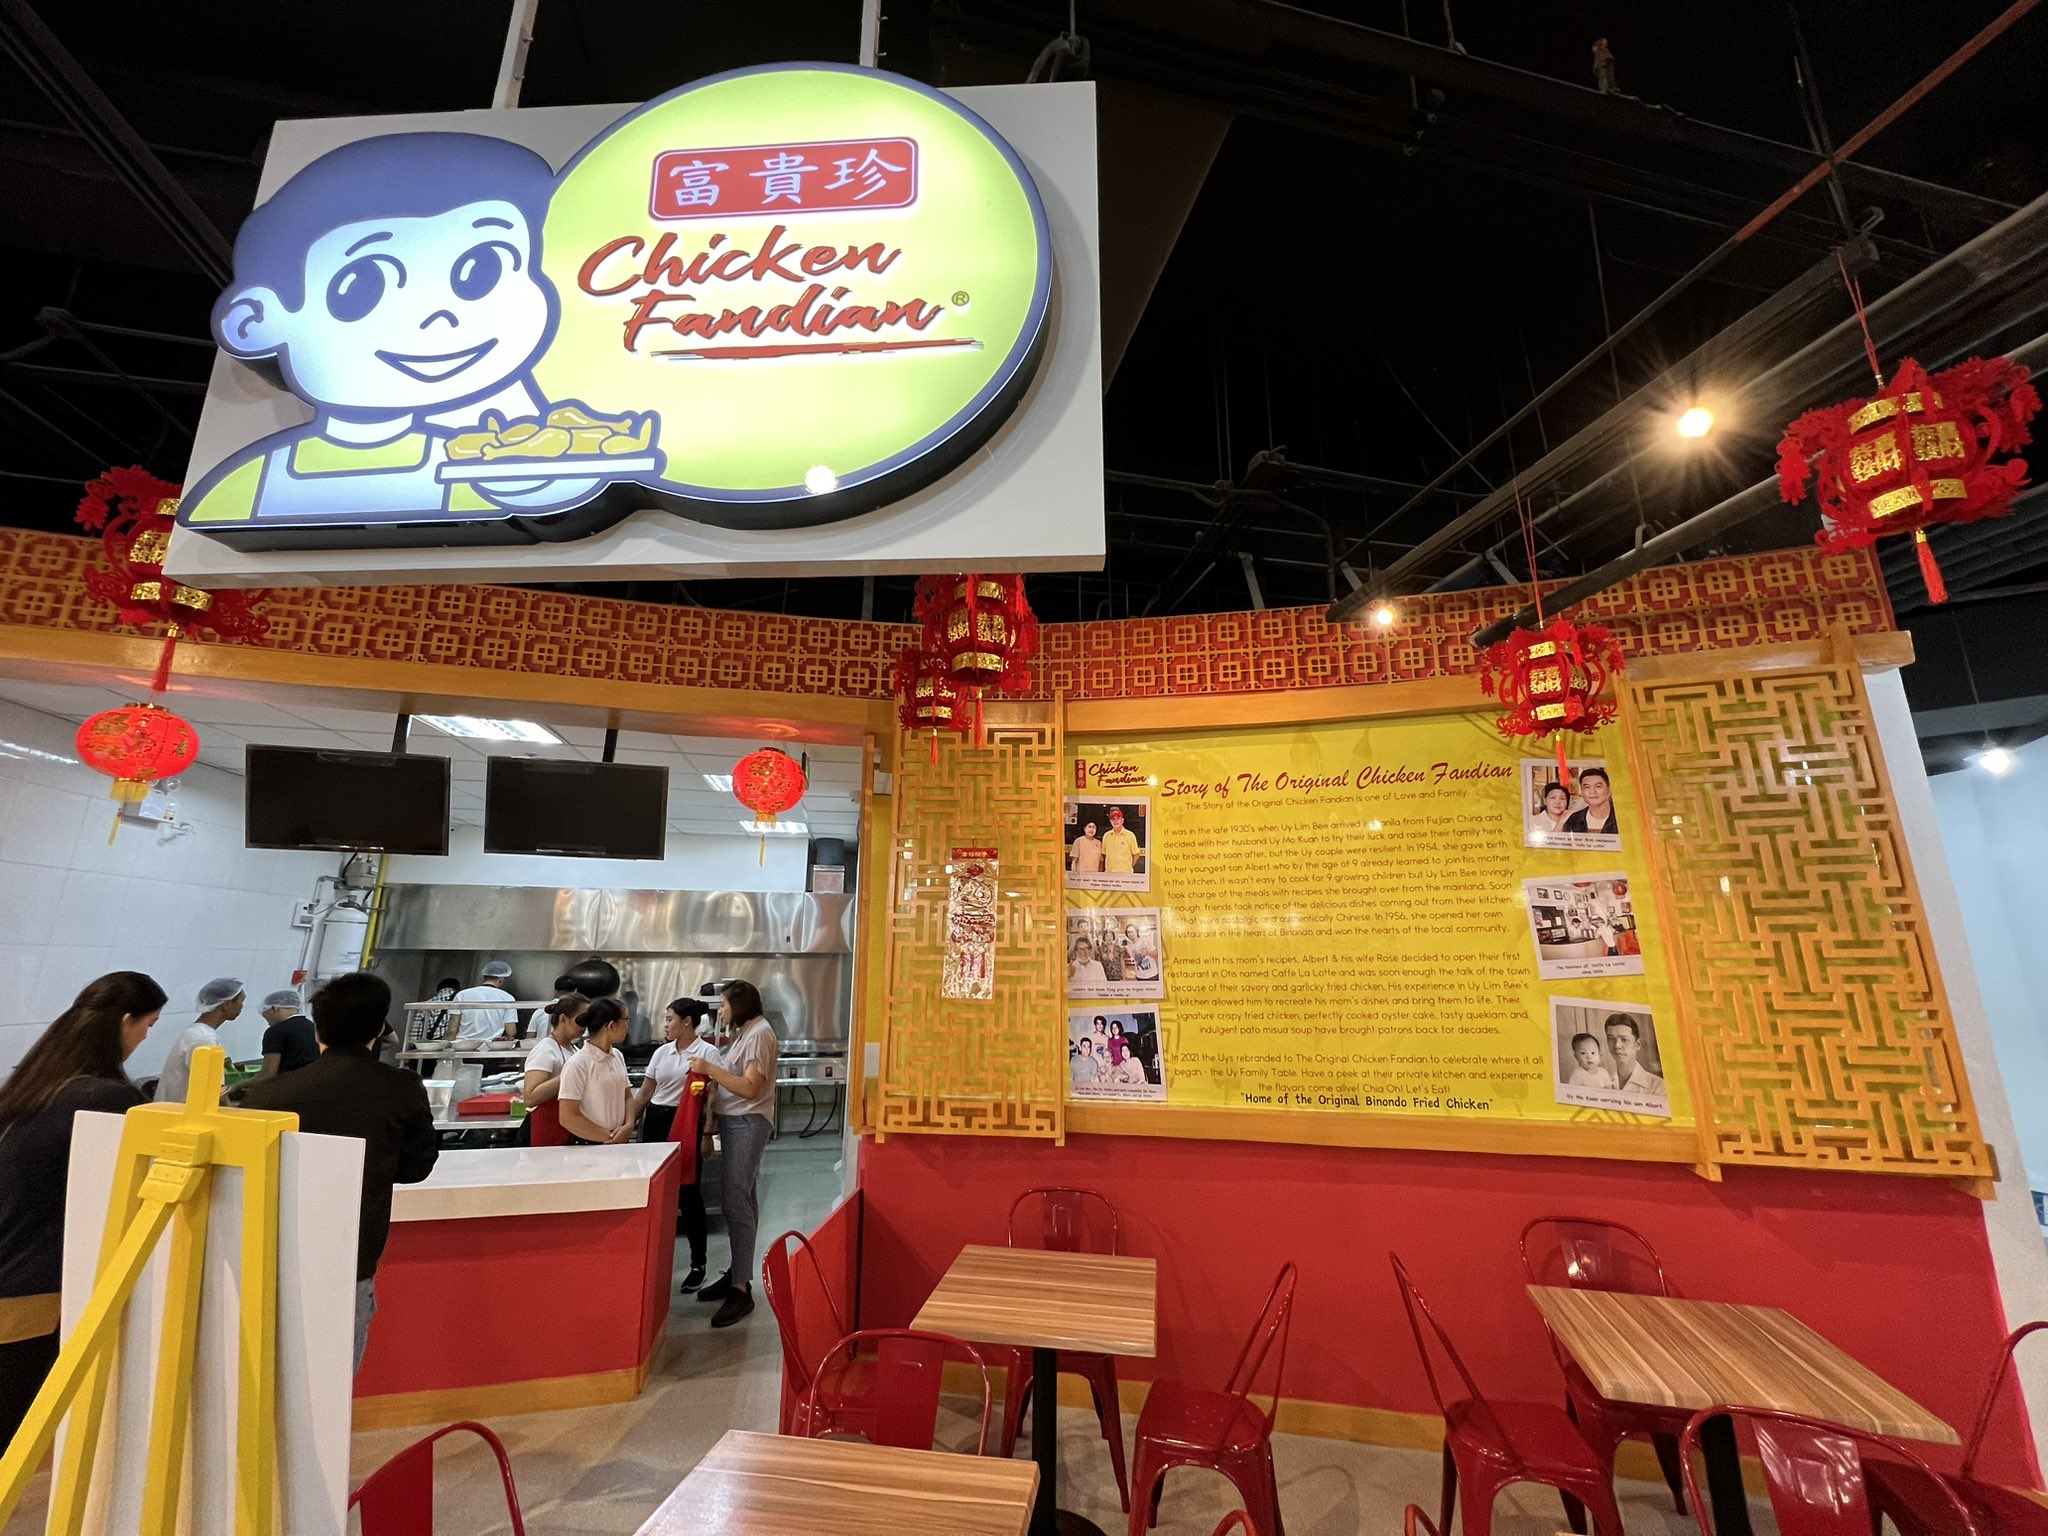 Manila’s famous Chicken Fandian finds new home in Araneta City